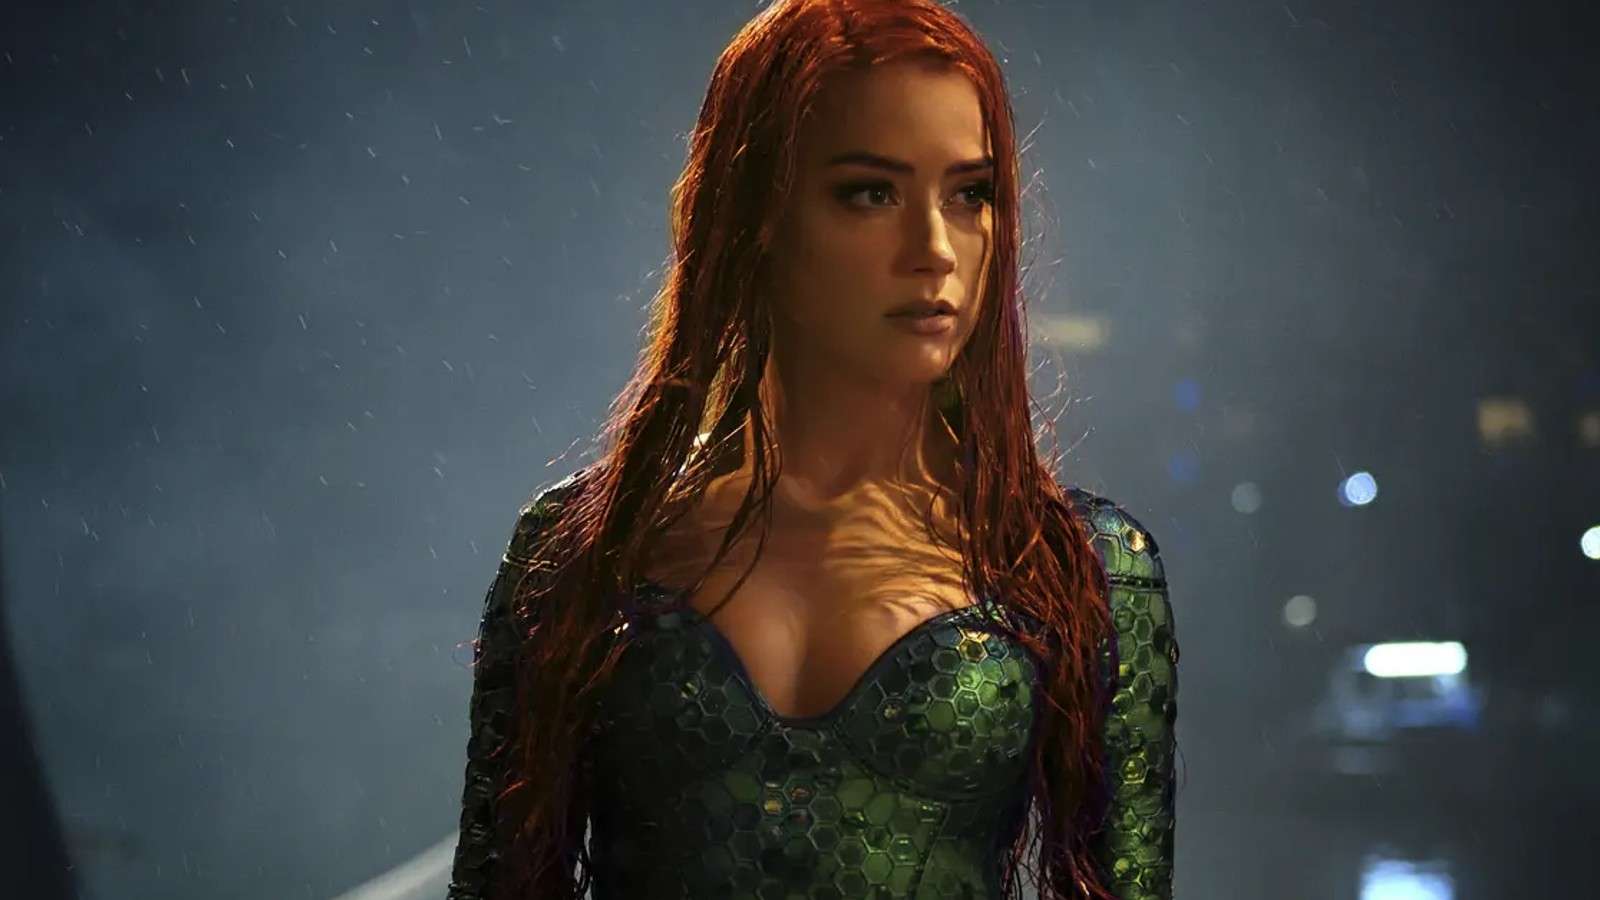 Amber Heard on land in Aquaman 2.